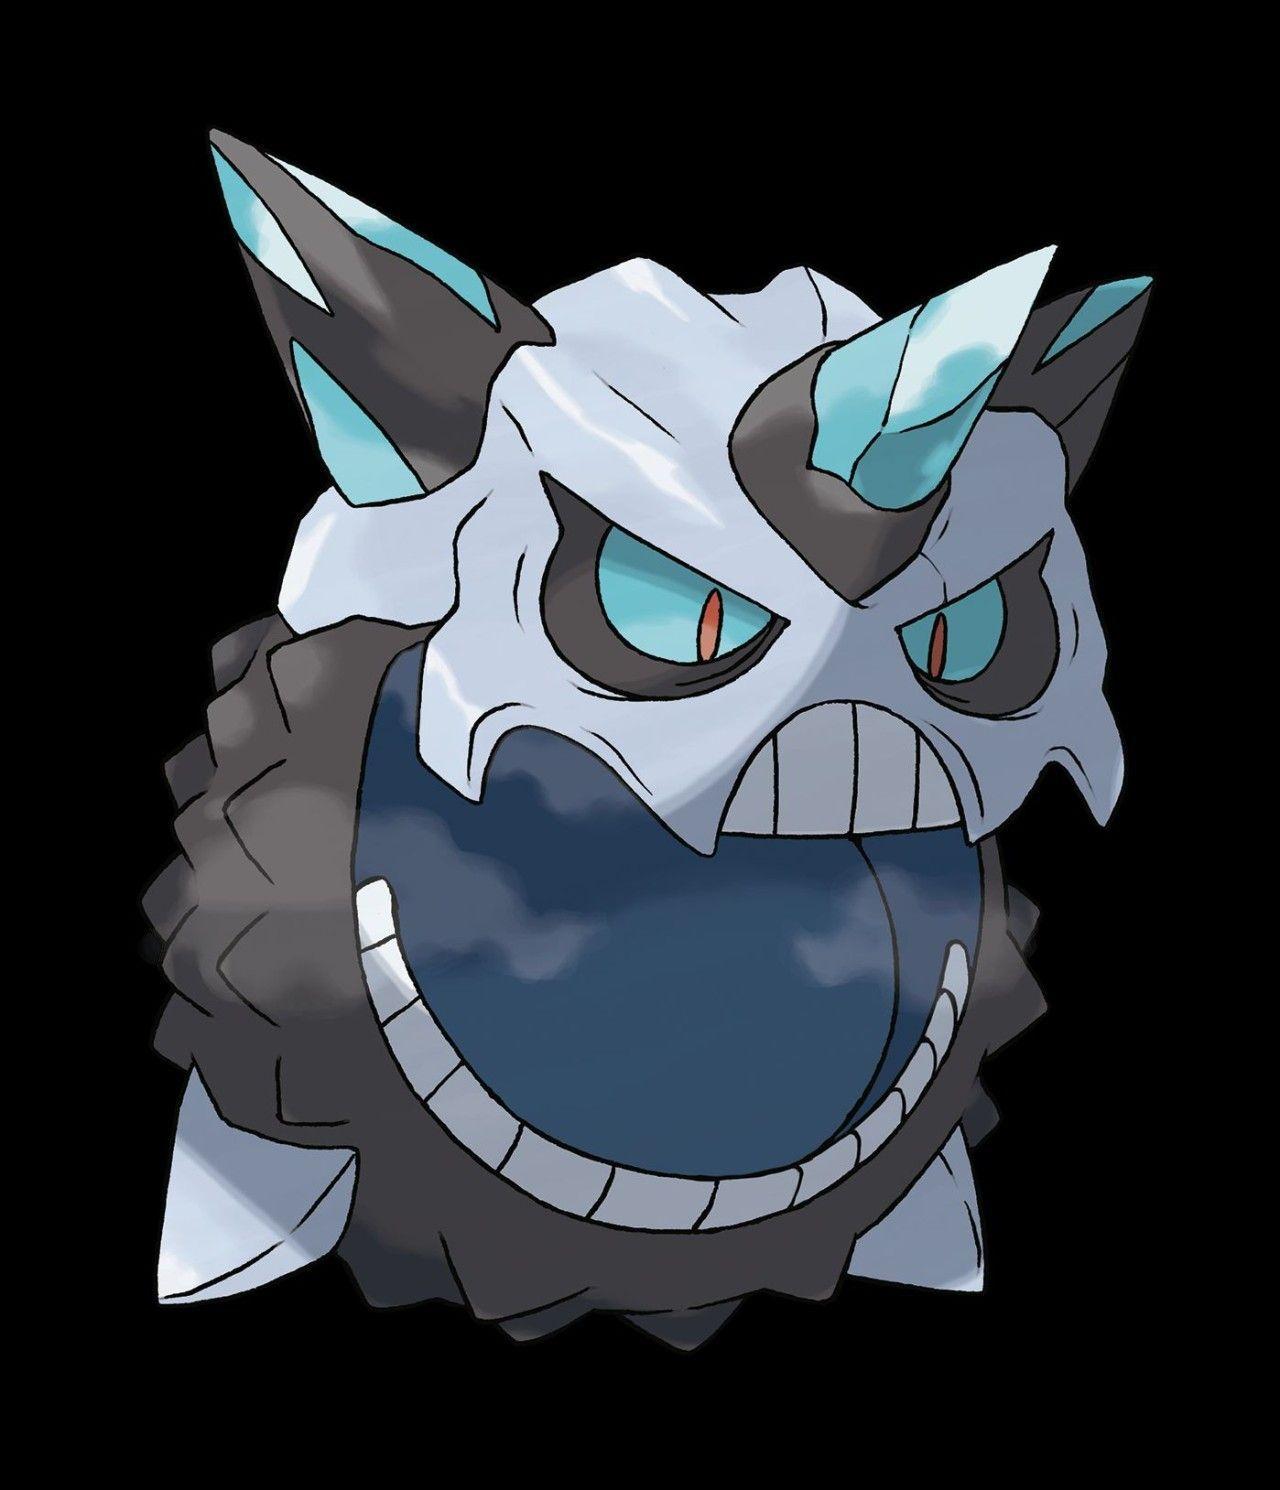 Mega Steelix and Glalie Confirmed for Pokémon Omega Ruby and Alpha